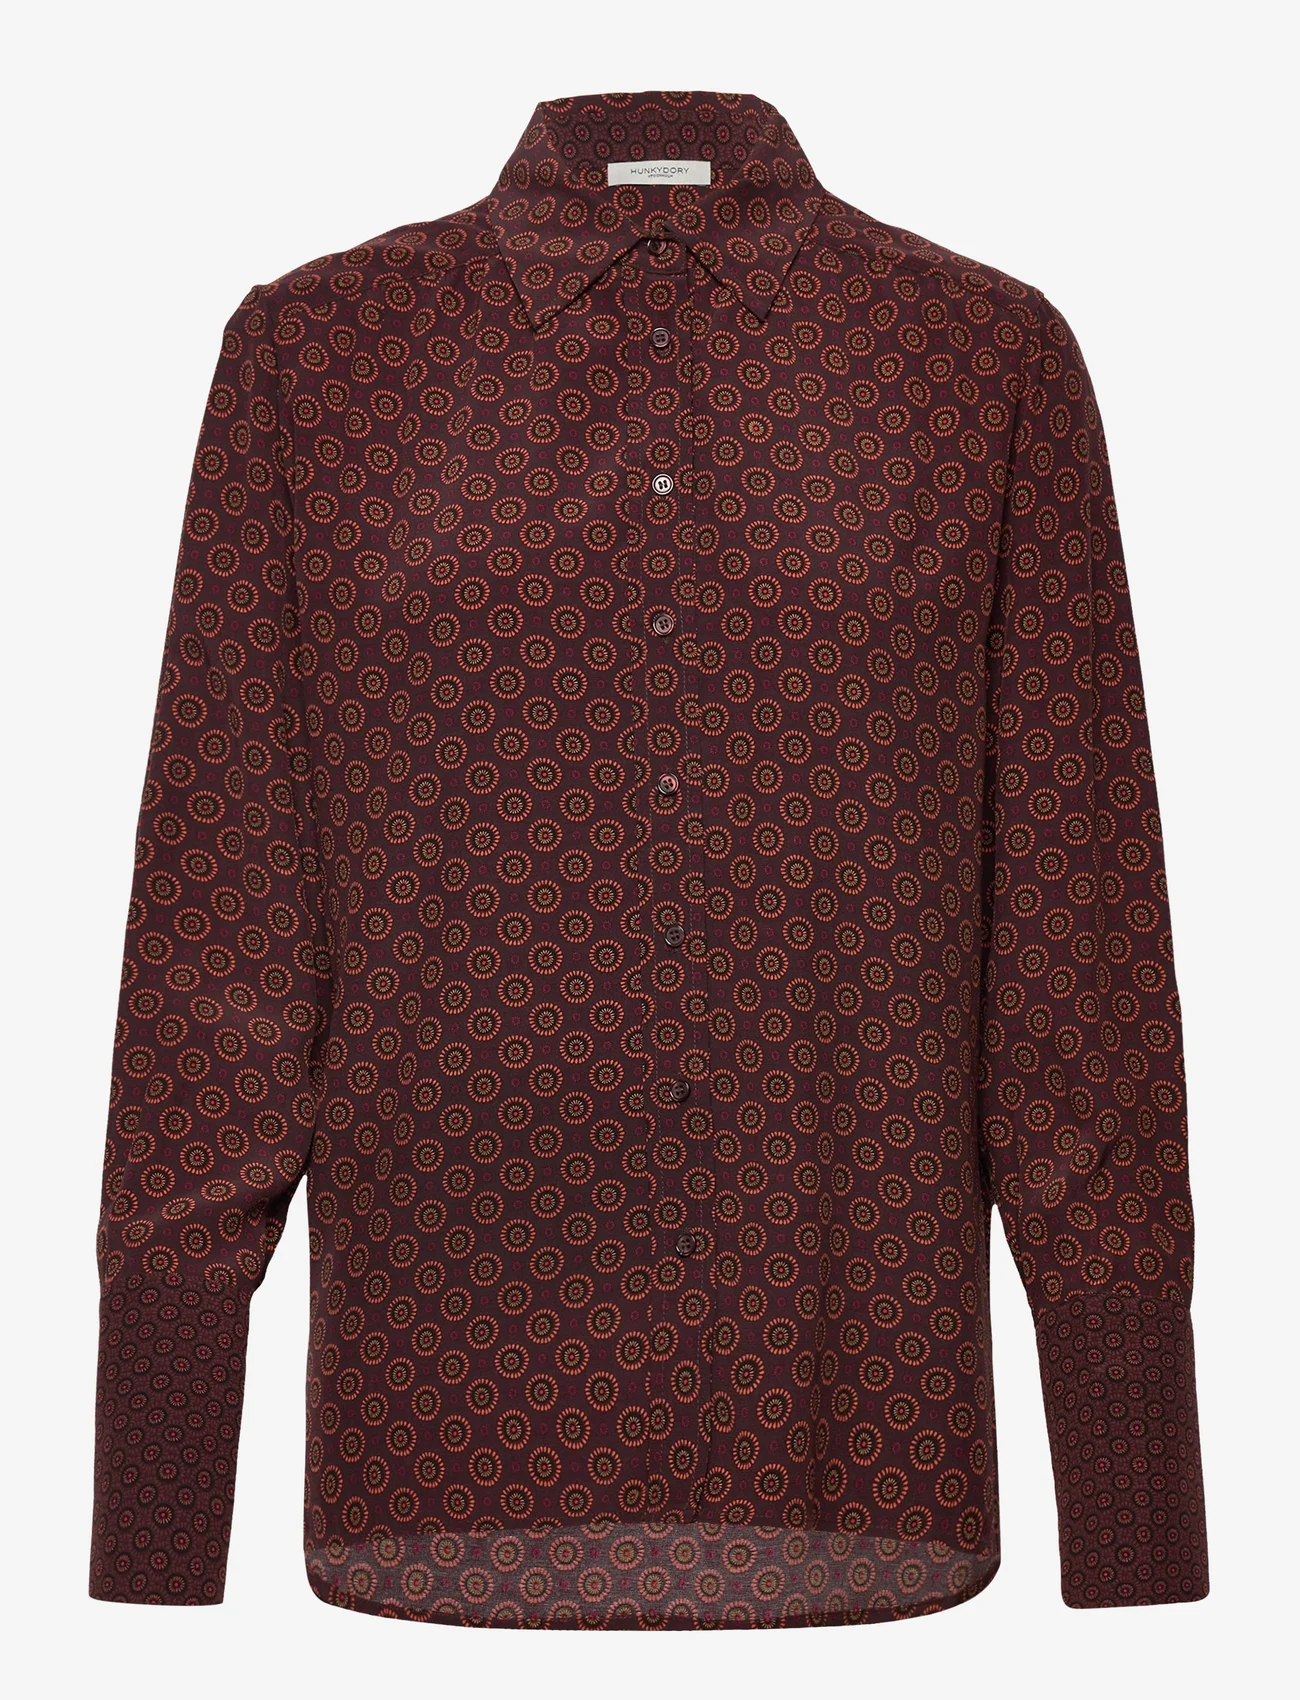 HUNKYDORY - Ellie Shirt - long-sleeved shirts - chocolate brown aop - 0